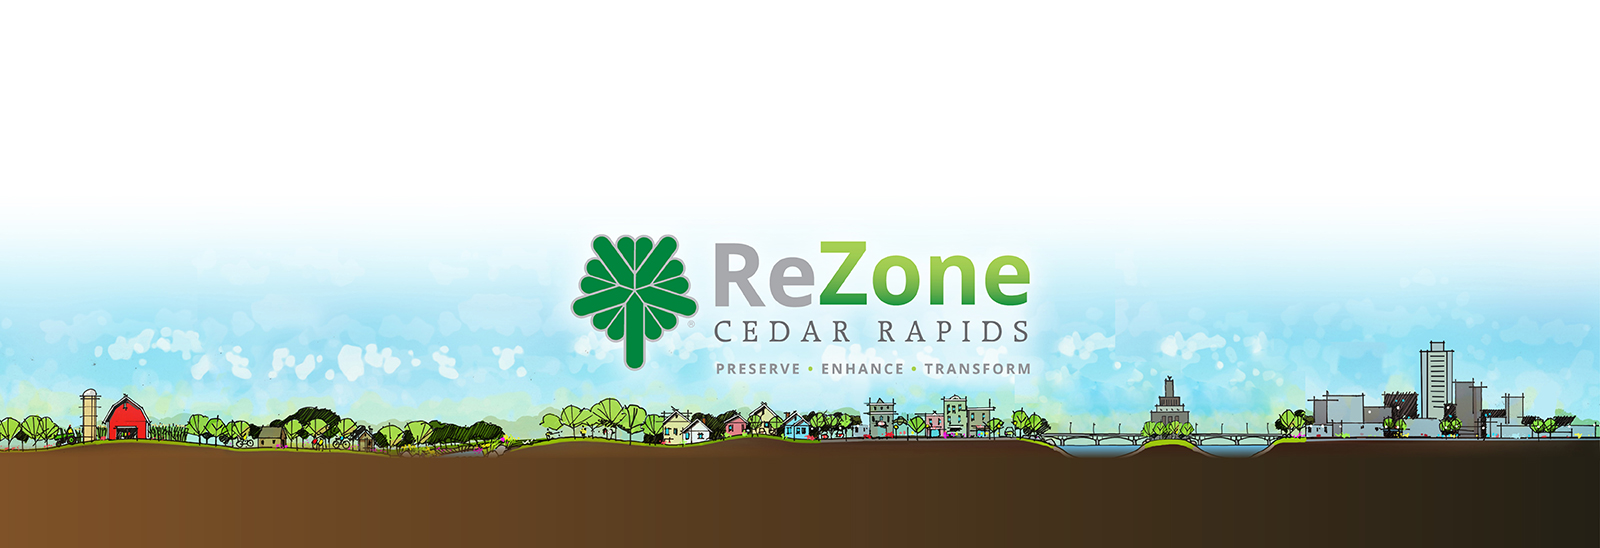 ReZone-Web-Banner